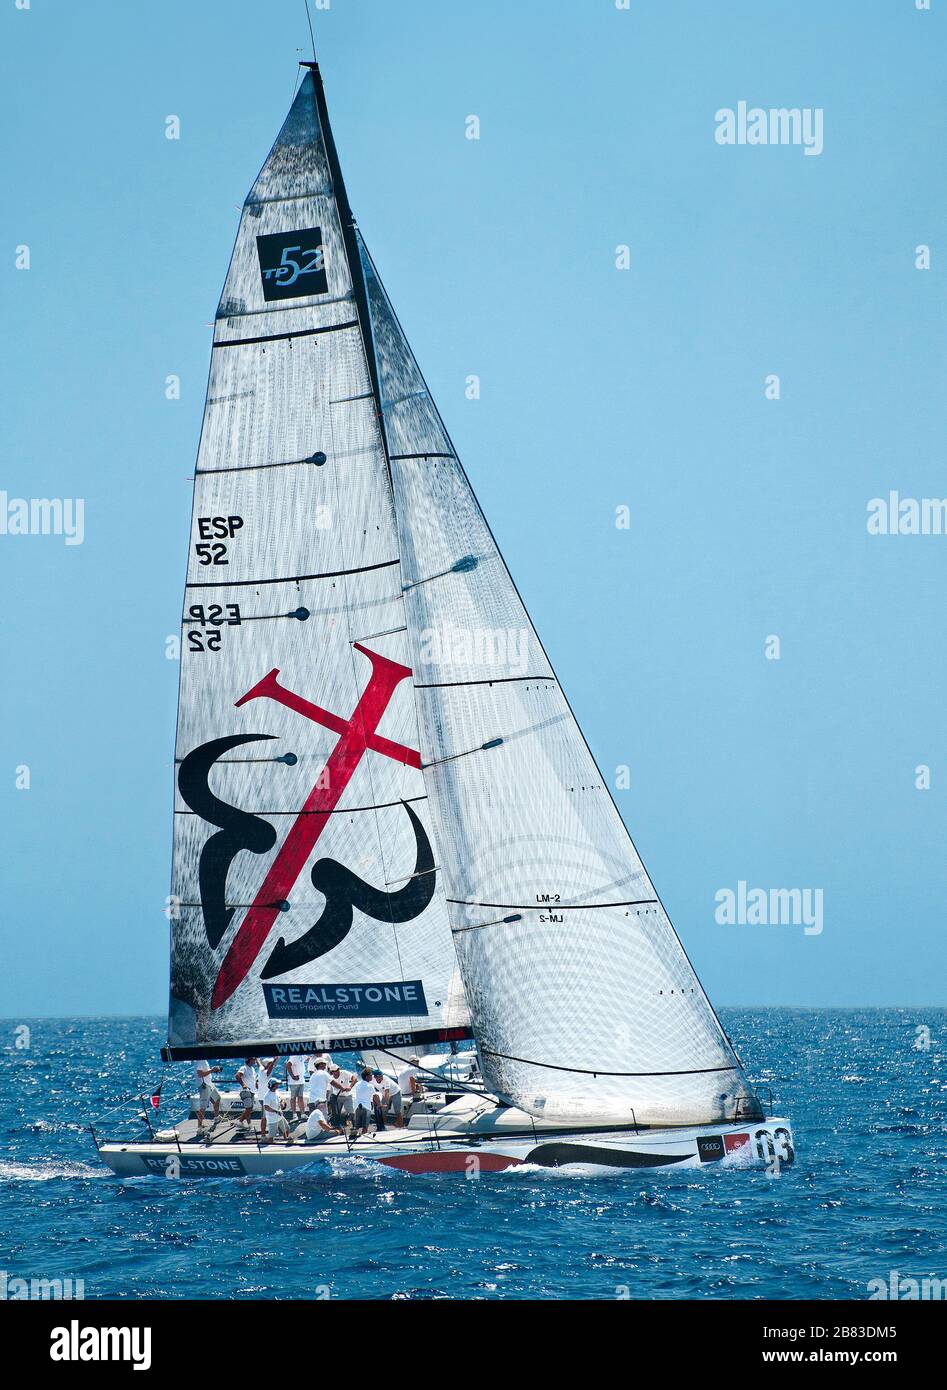 Von Realstone gesponserte Yacht, Copa del Rey, Palma de Mallorca, Balearen, Spanien Stockfoto